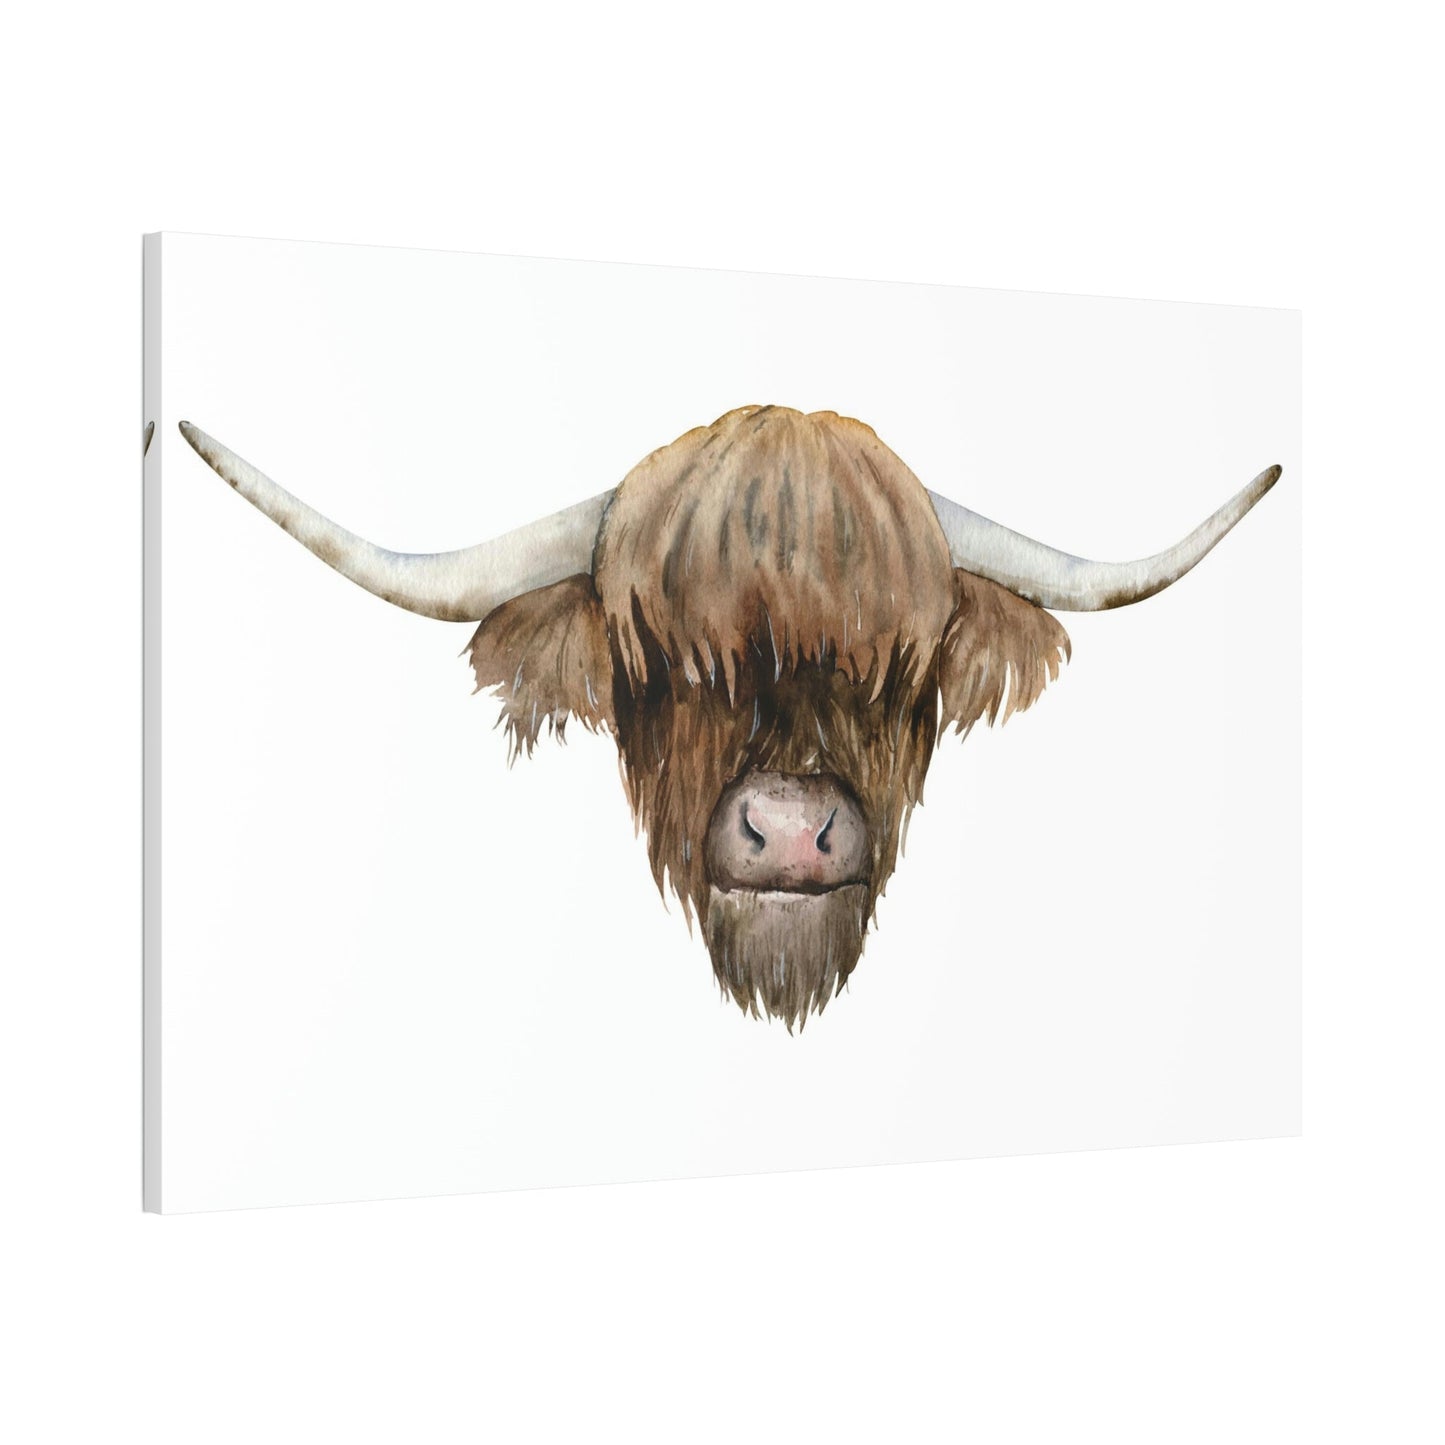 Gentle Bovine Beauty: Cow Art for a Timeless Wall Art Statement